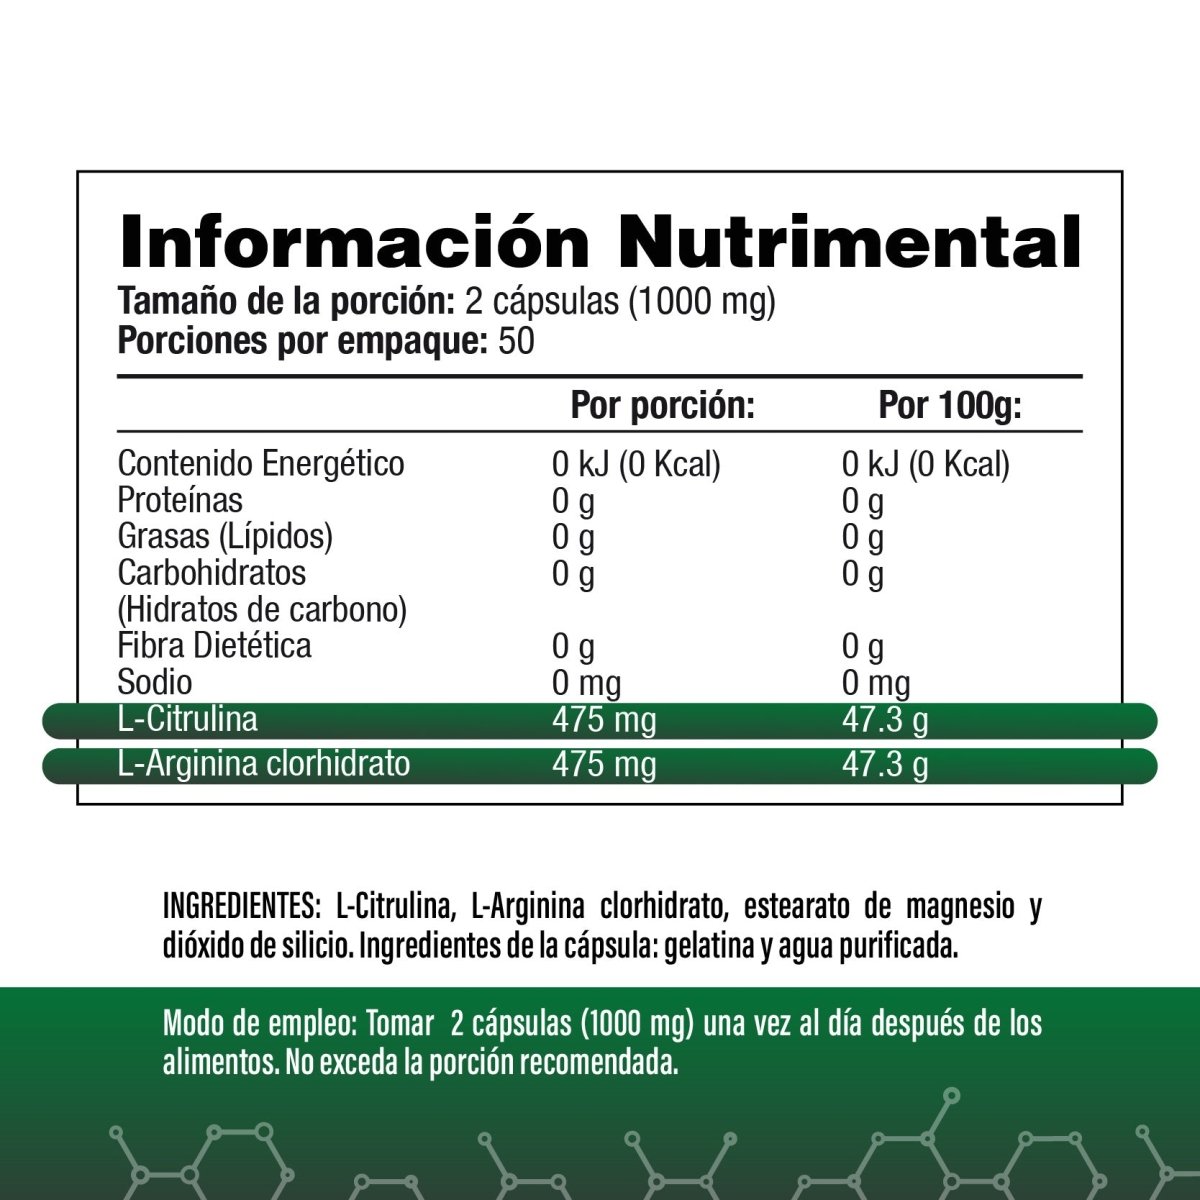 L-Citrulina con Arginina 100 Cápsulas 500mg - SaludVida México